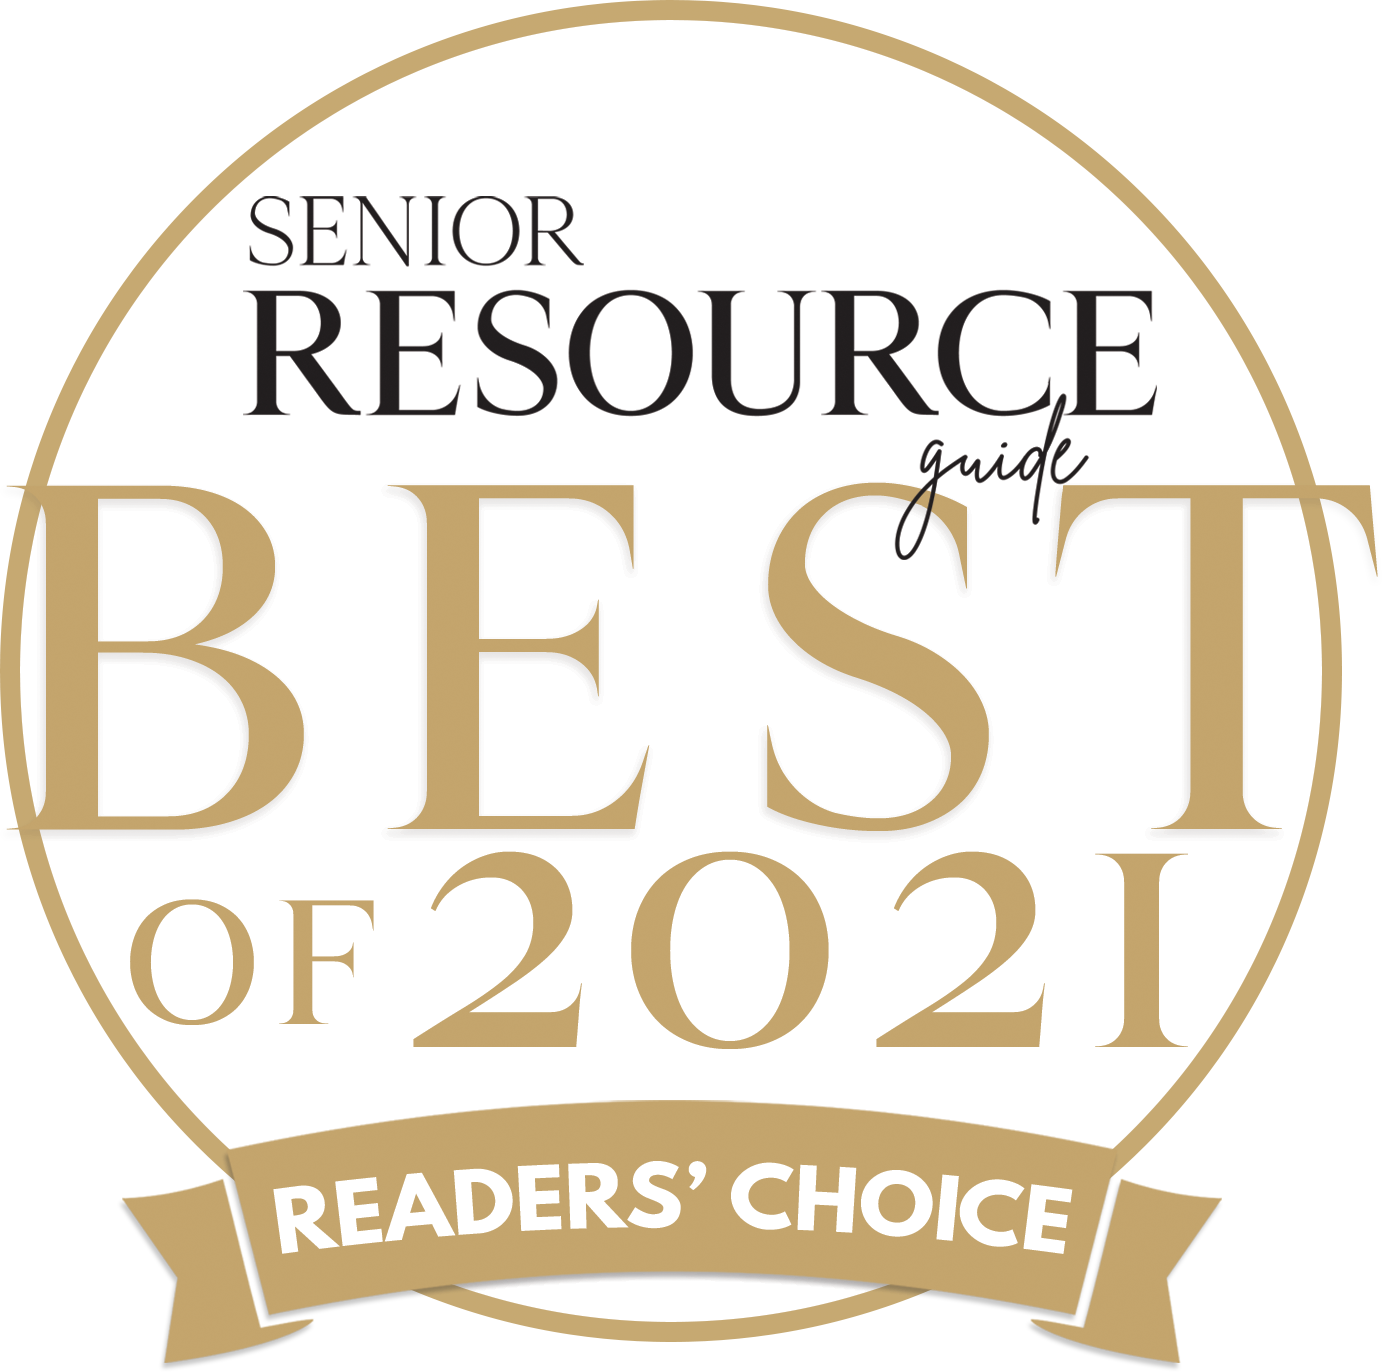 Senior Resource Guide Best of 2021